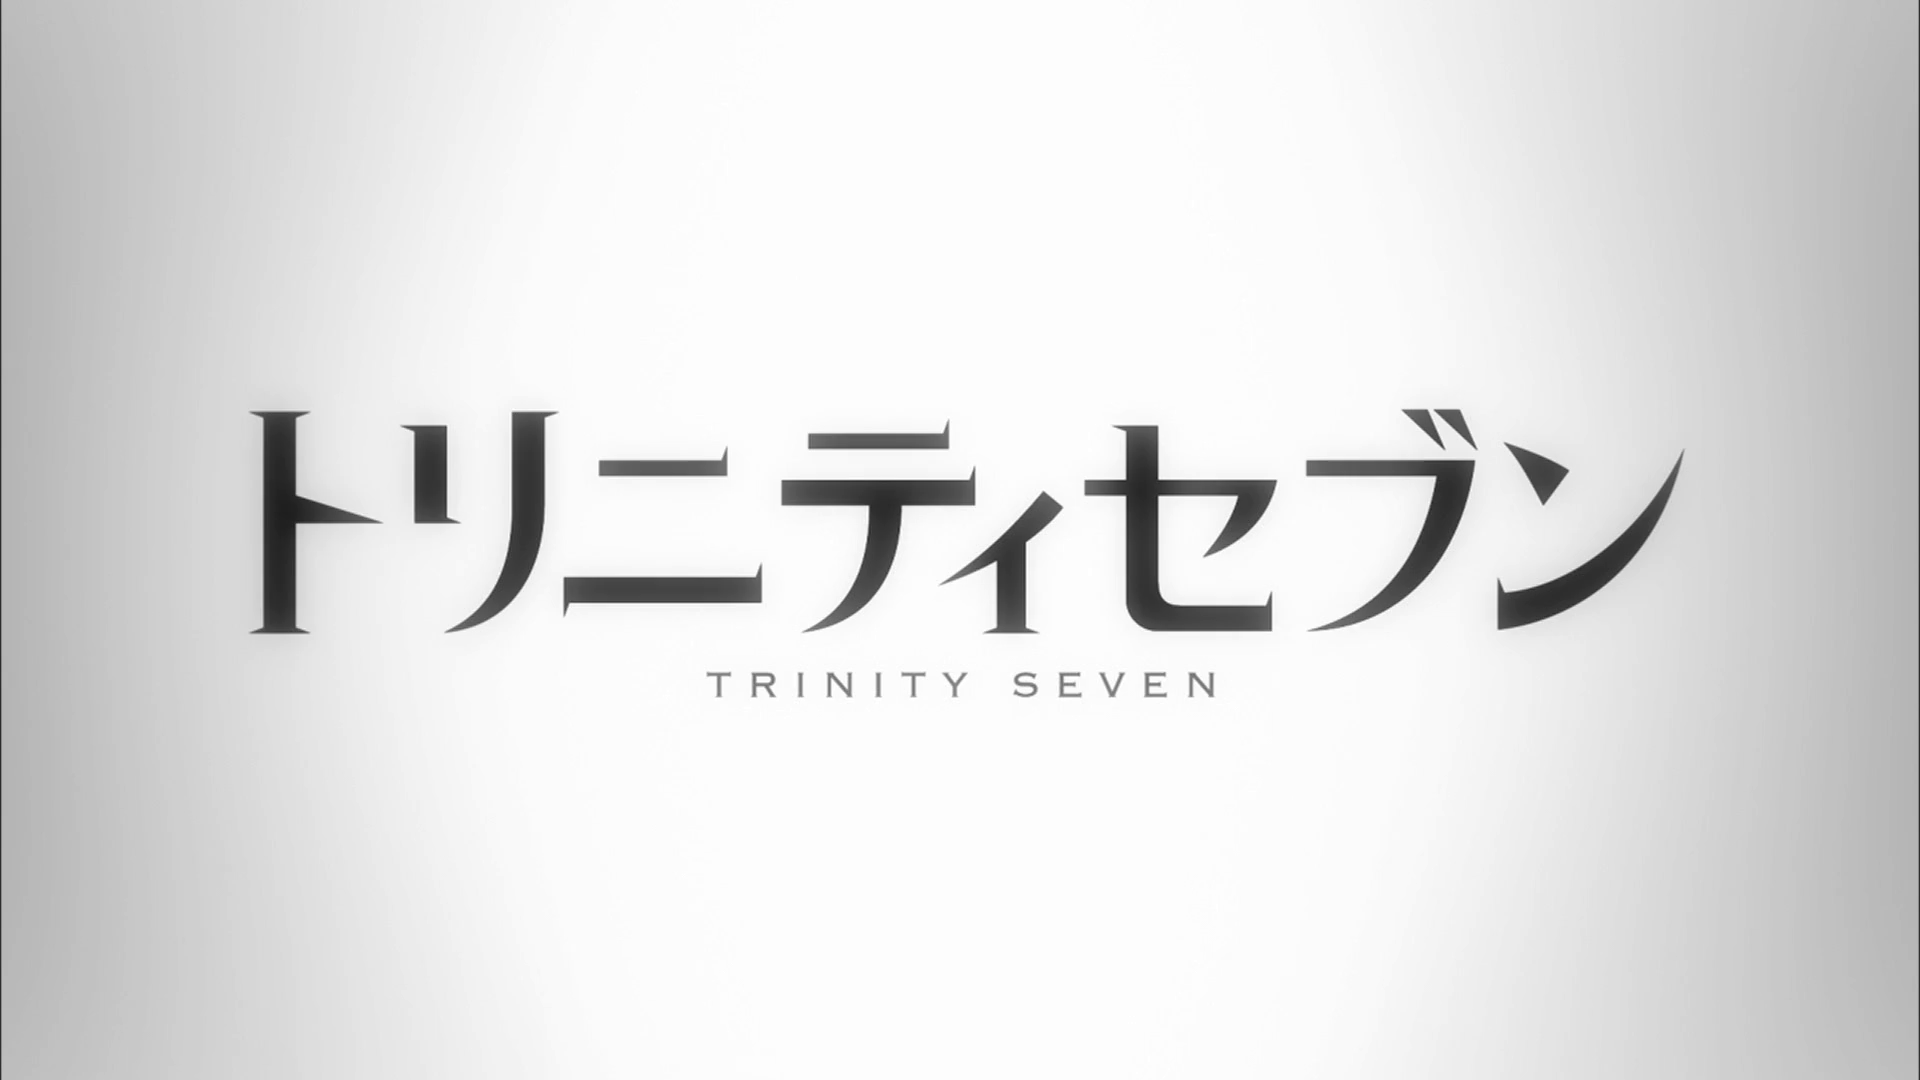 Trinity Seven 1920x1080